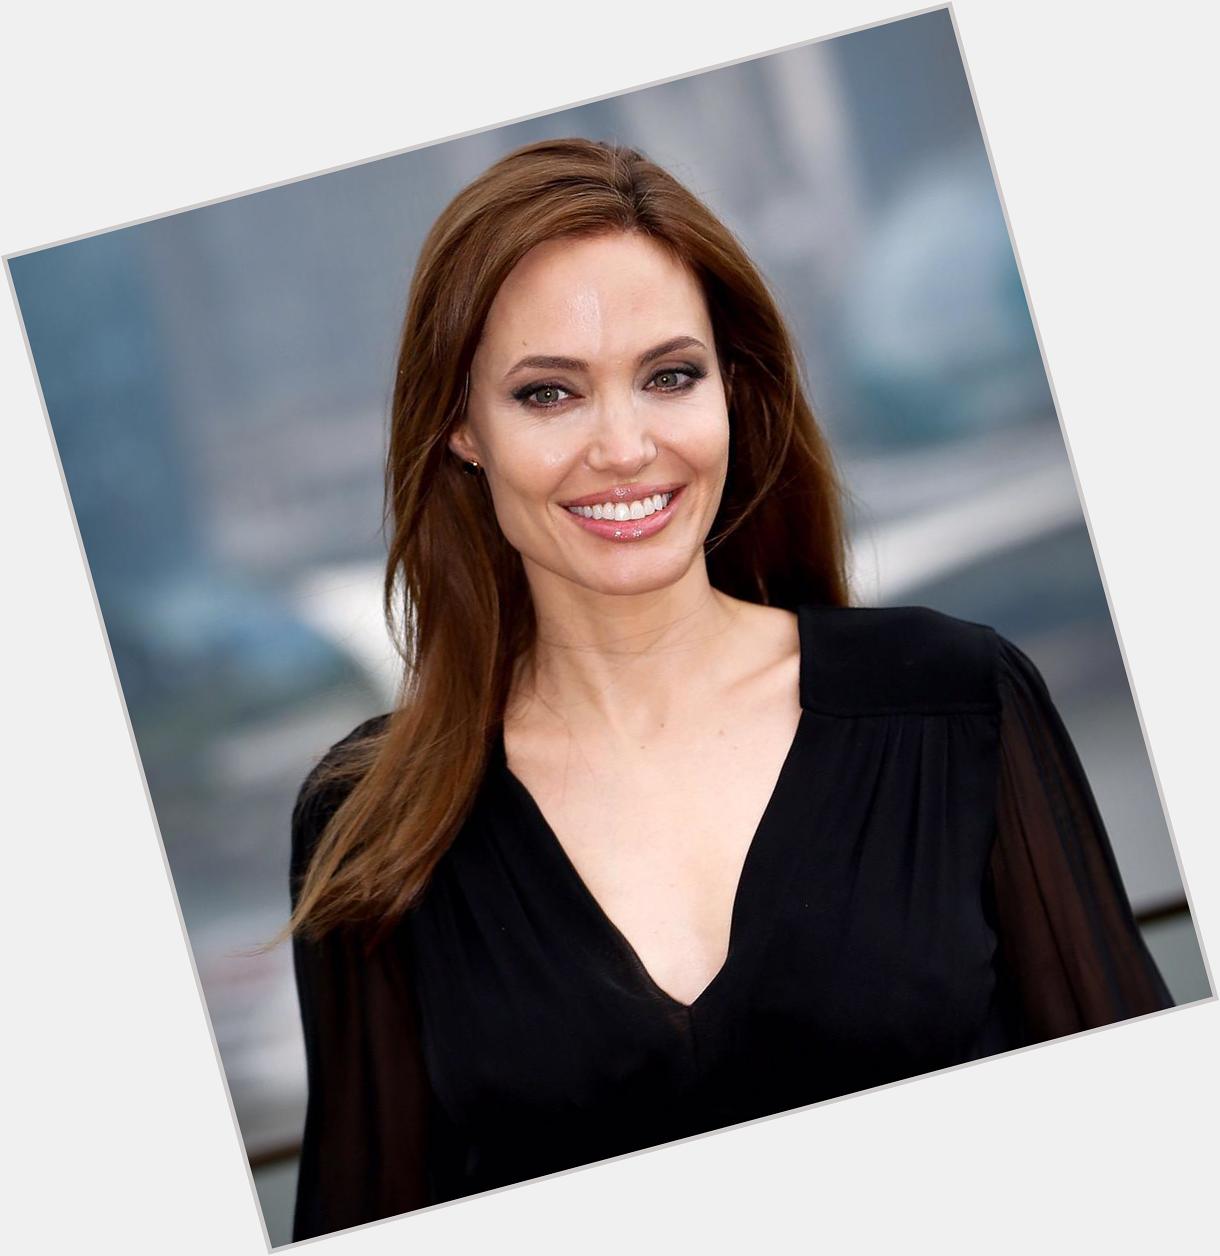 ¡Hoy Angelina Jolie celebra sus 40 años! Happy Birthday!   